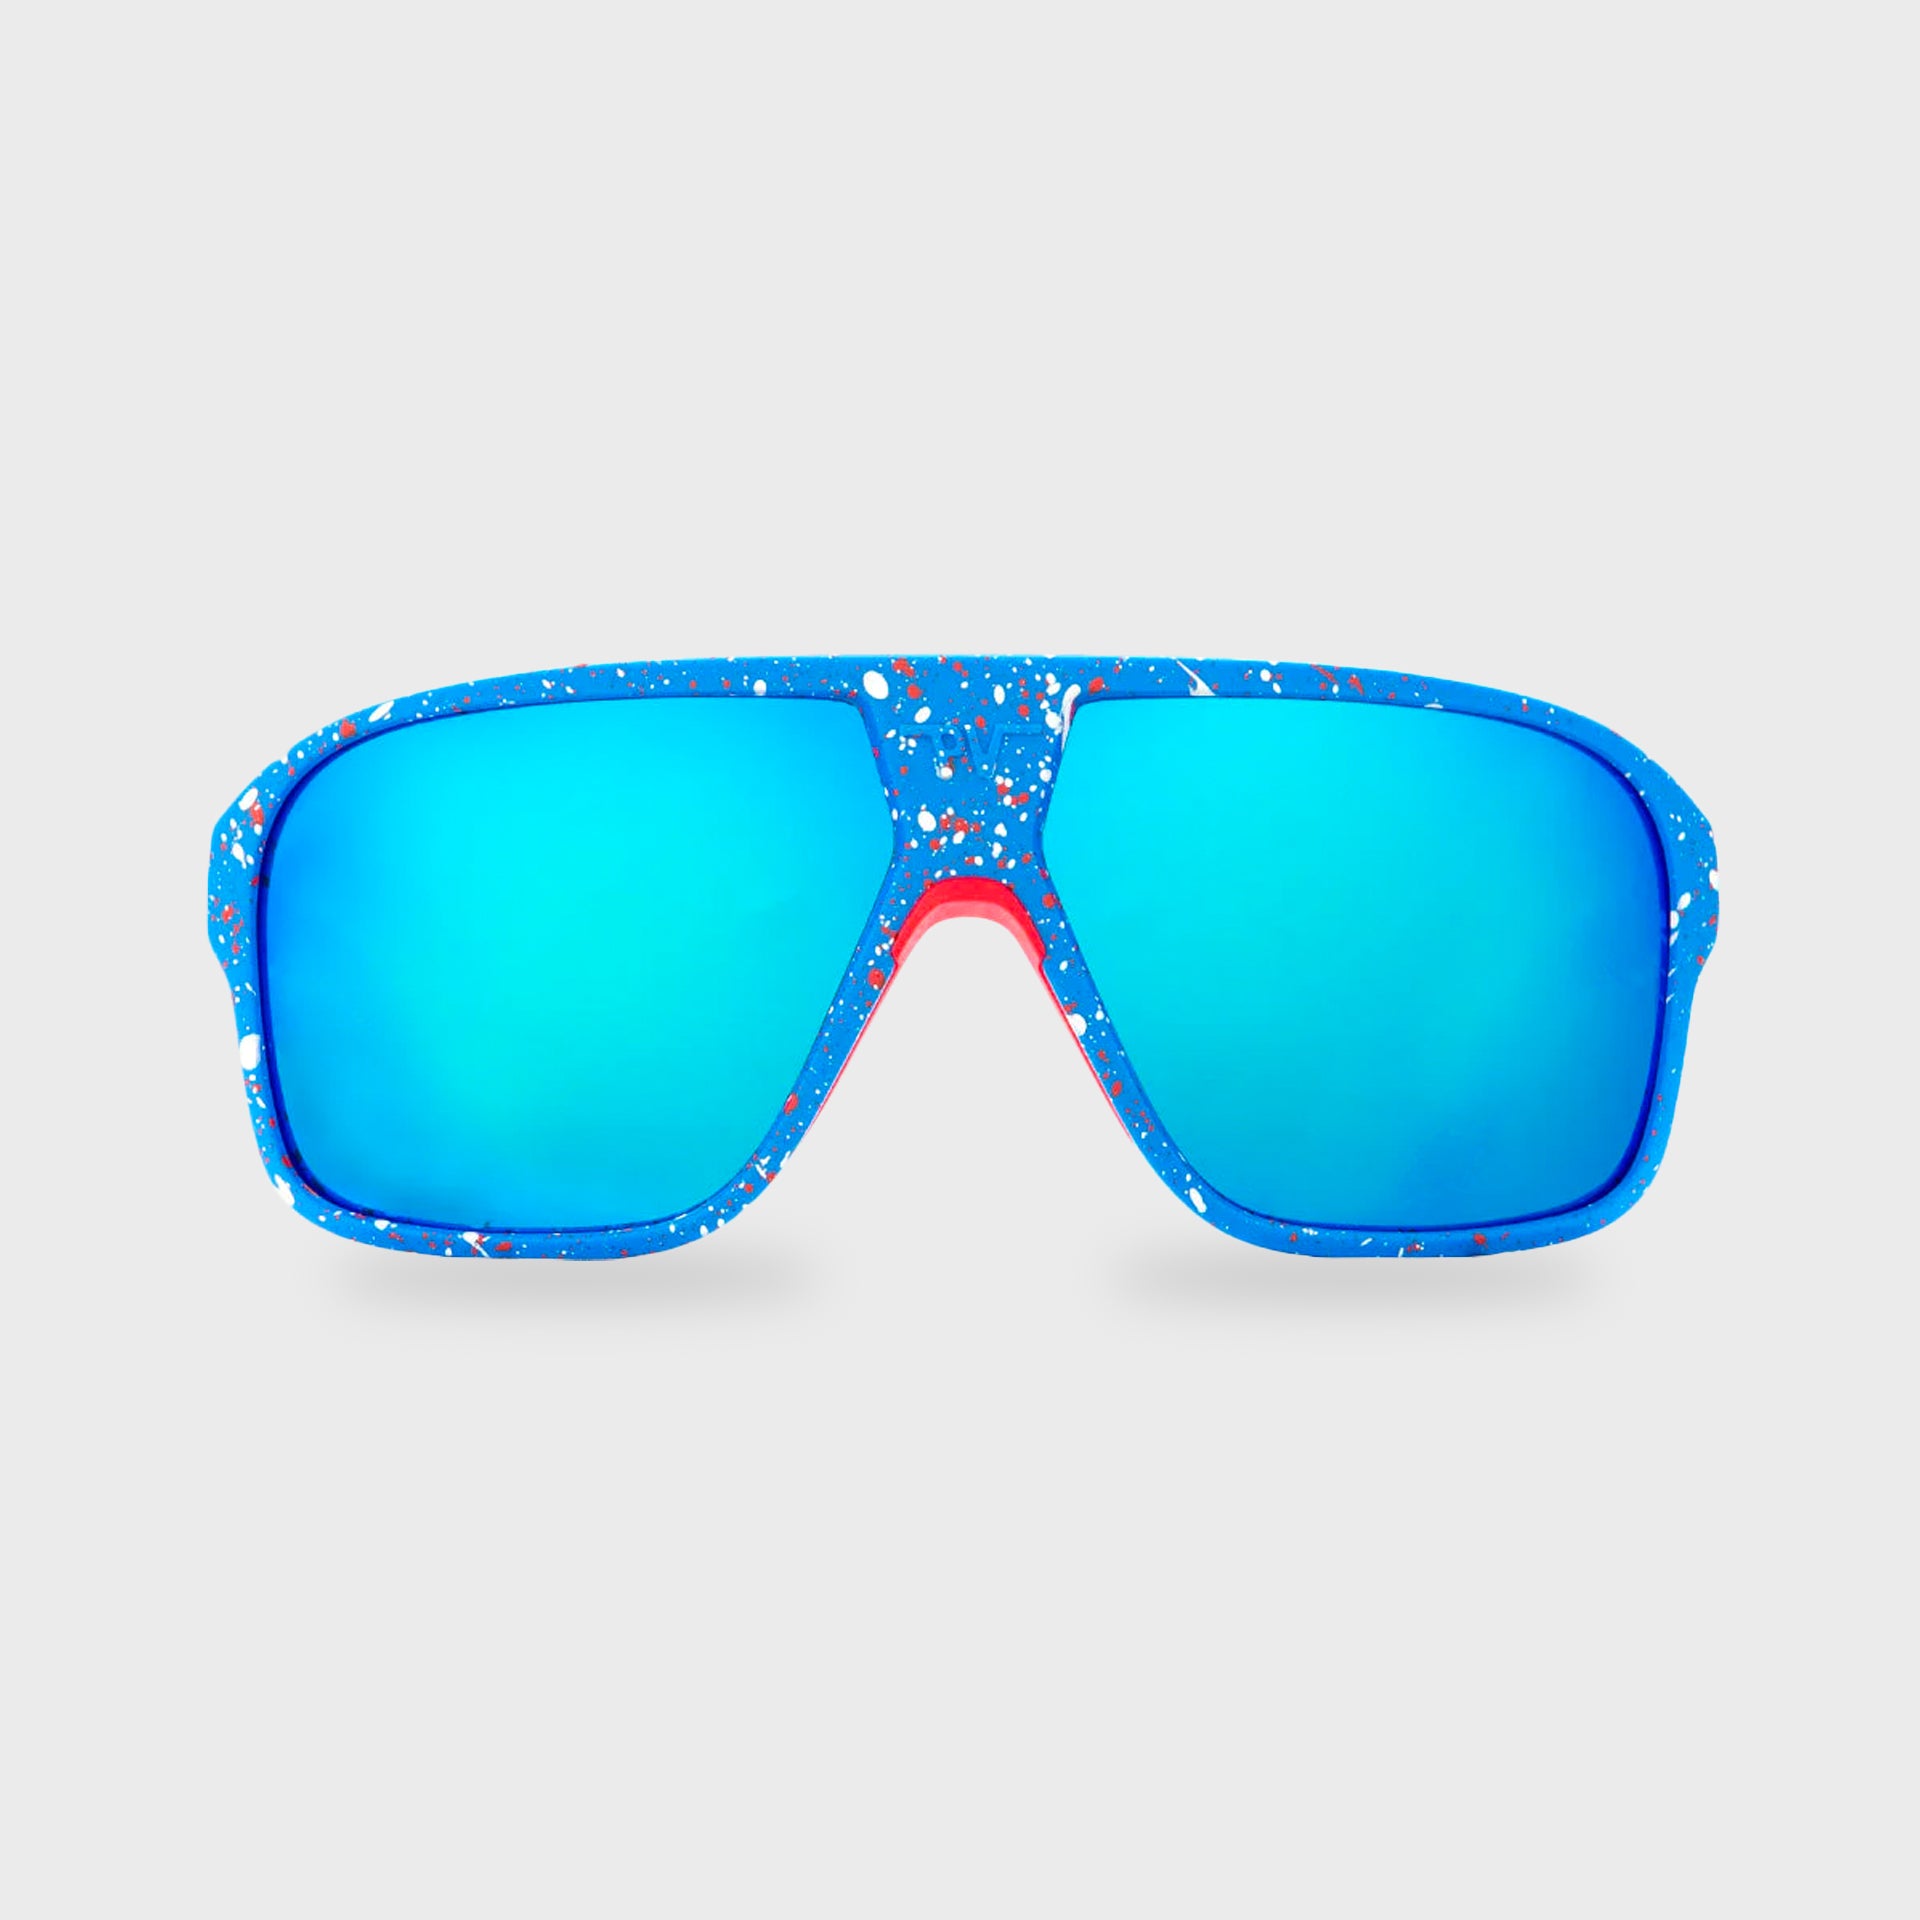 Pit Viper The Blue Ribbon Flight Optics Sunglasses - ManGo Surfing